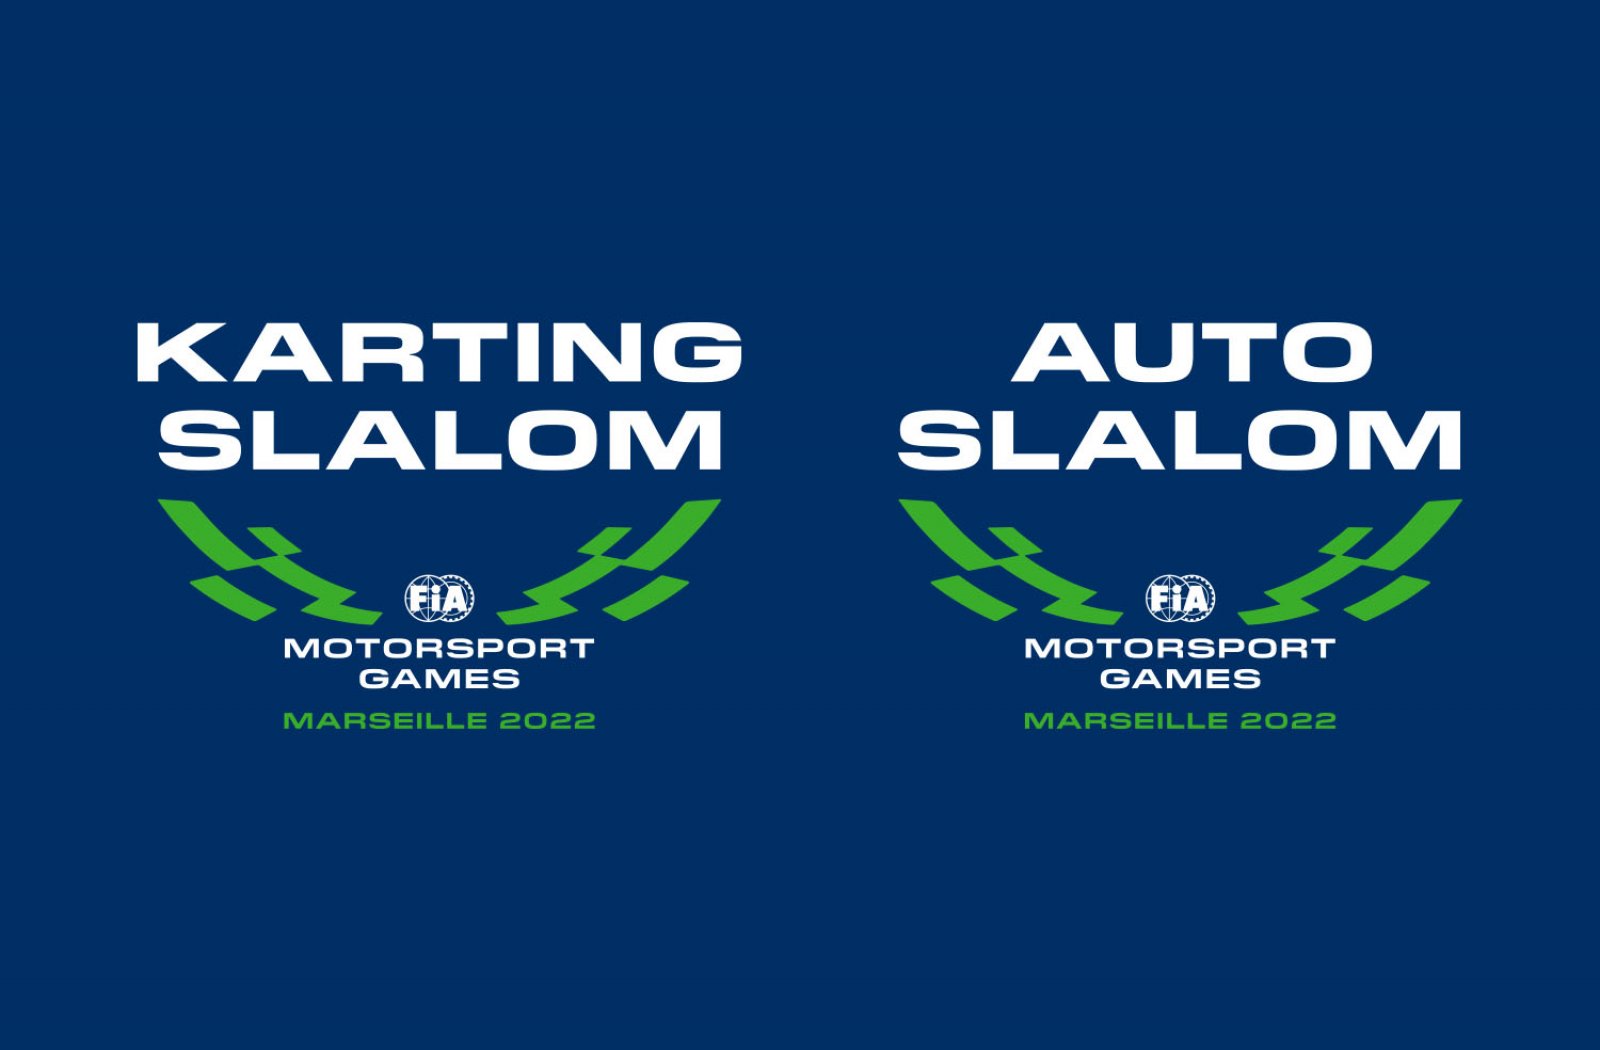 FIA Motorsport Games Preview: Auto Slalom & Karting Slalom 